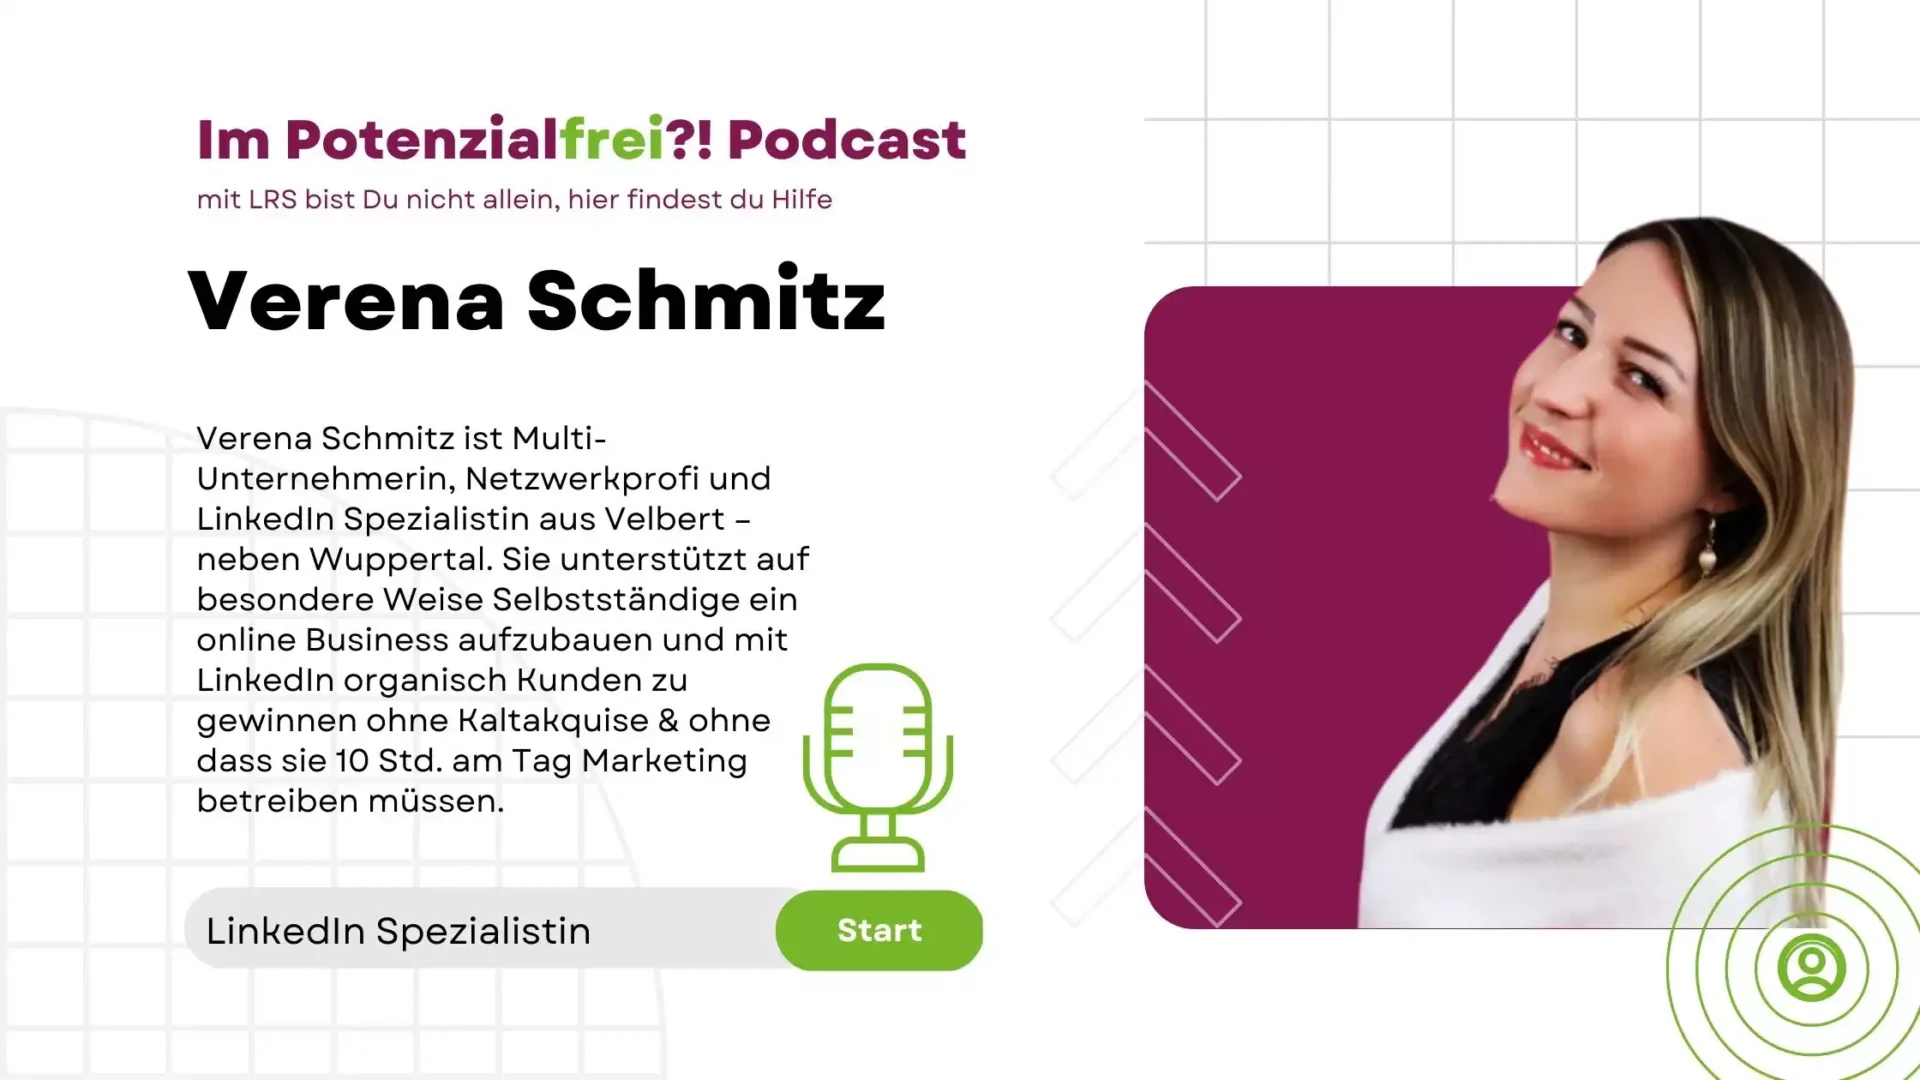 Verena Schmitz LinkedIn Spezialistin im Potenzialfrei! Podcast